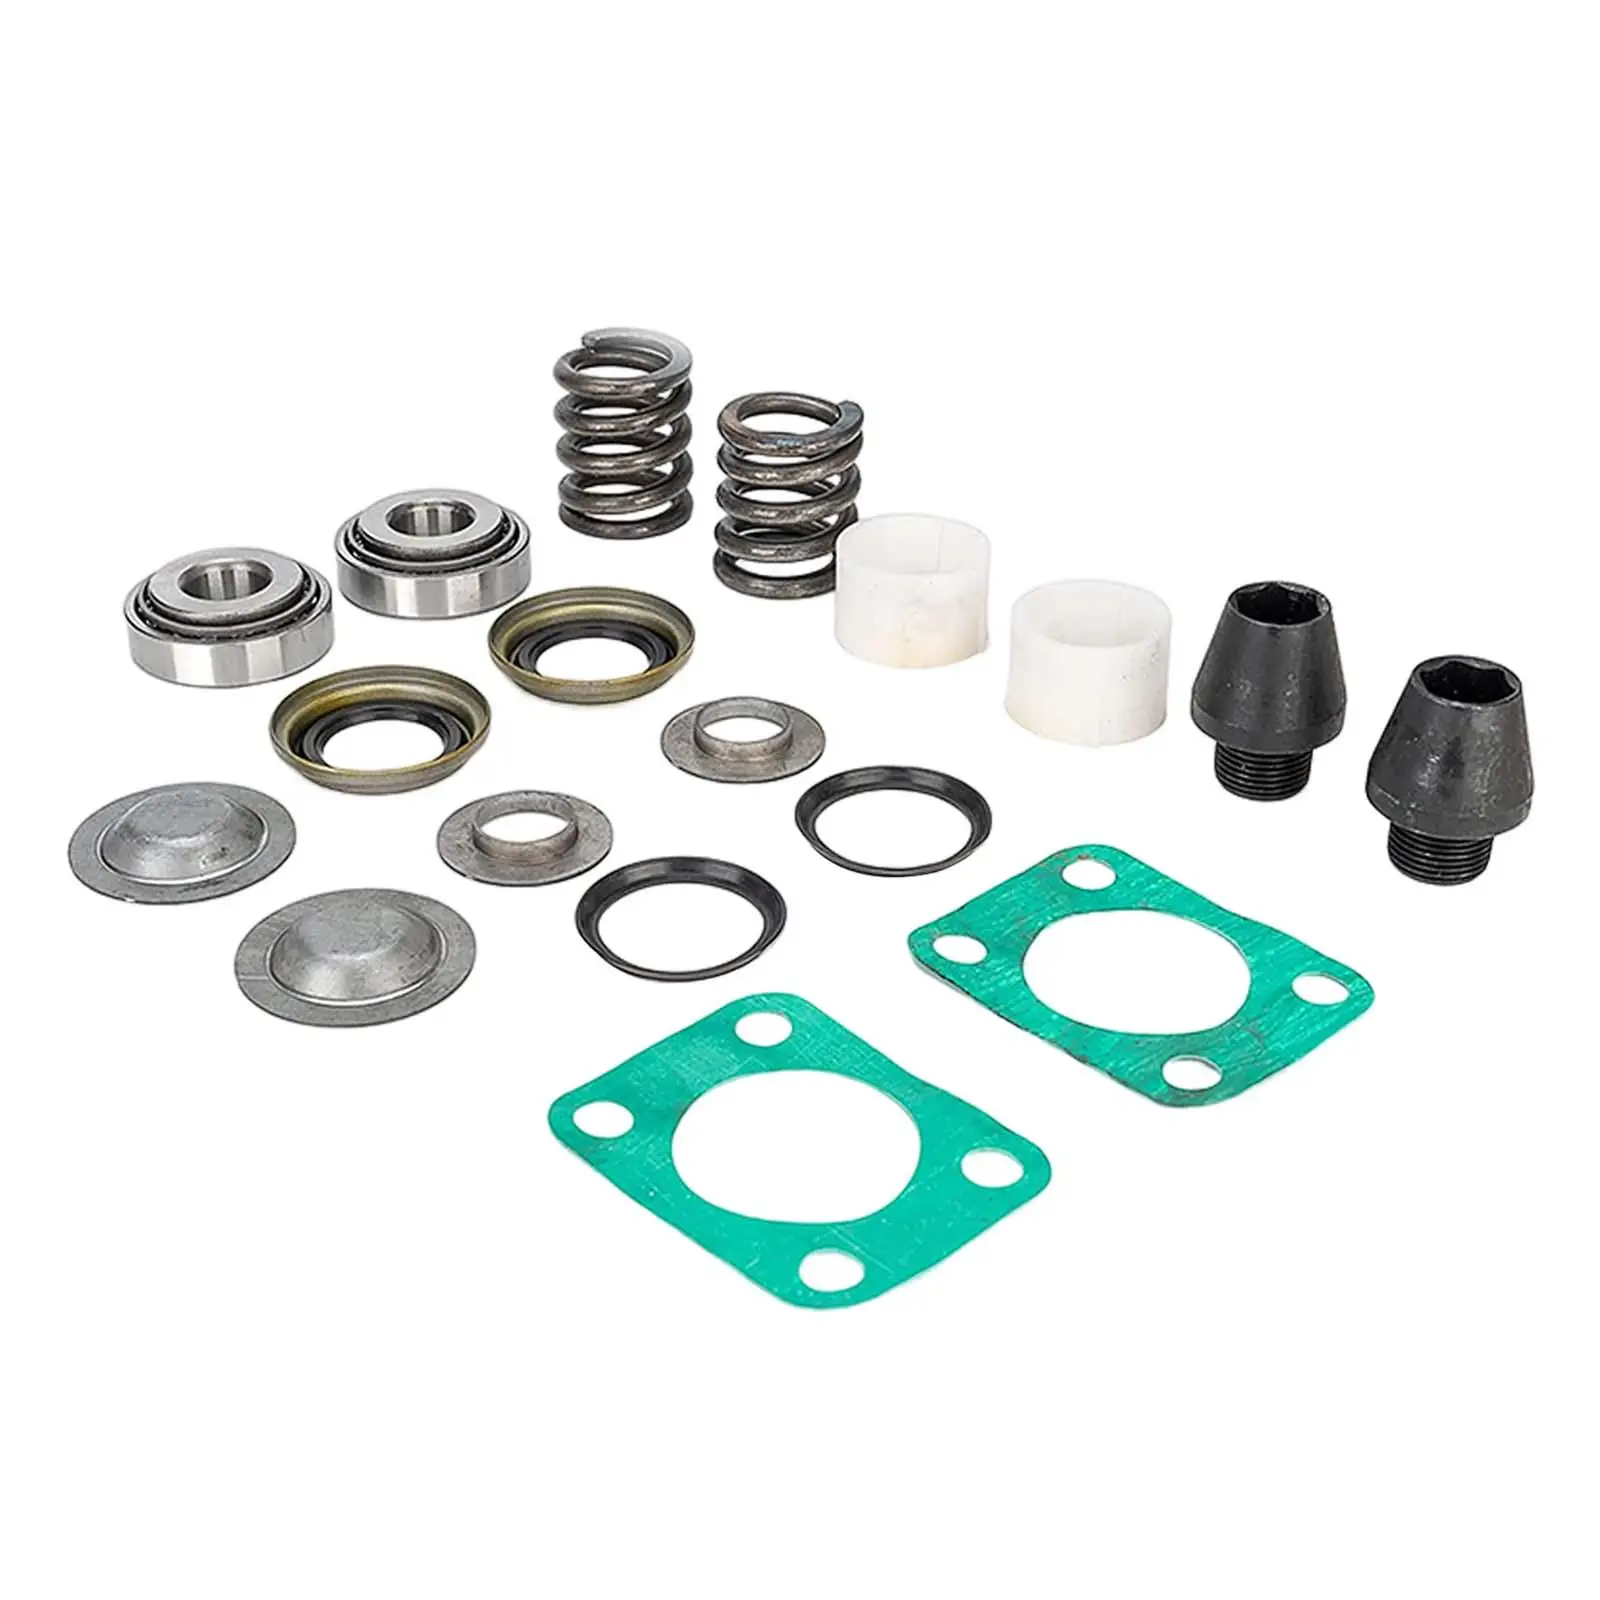 Kingpin Bearing Seal Rebuild Kit 706395x Replace Parts 37300 37307 706395 for Dodge Dana 60 Automotive Accessories Durable